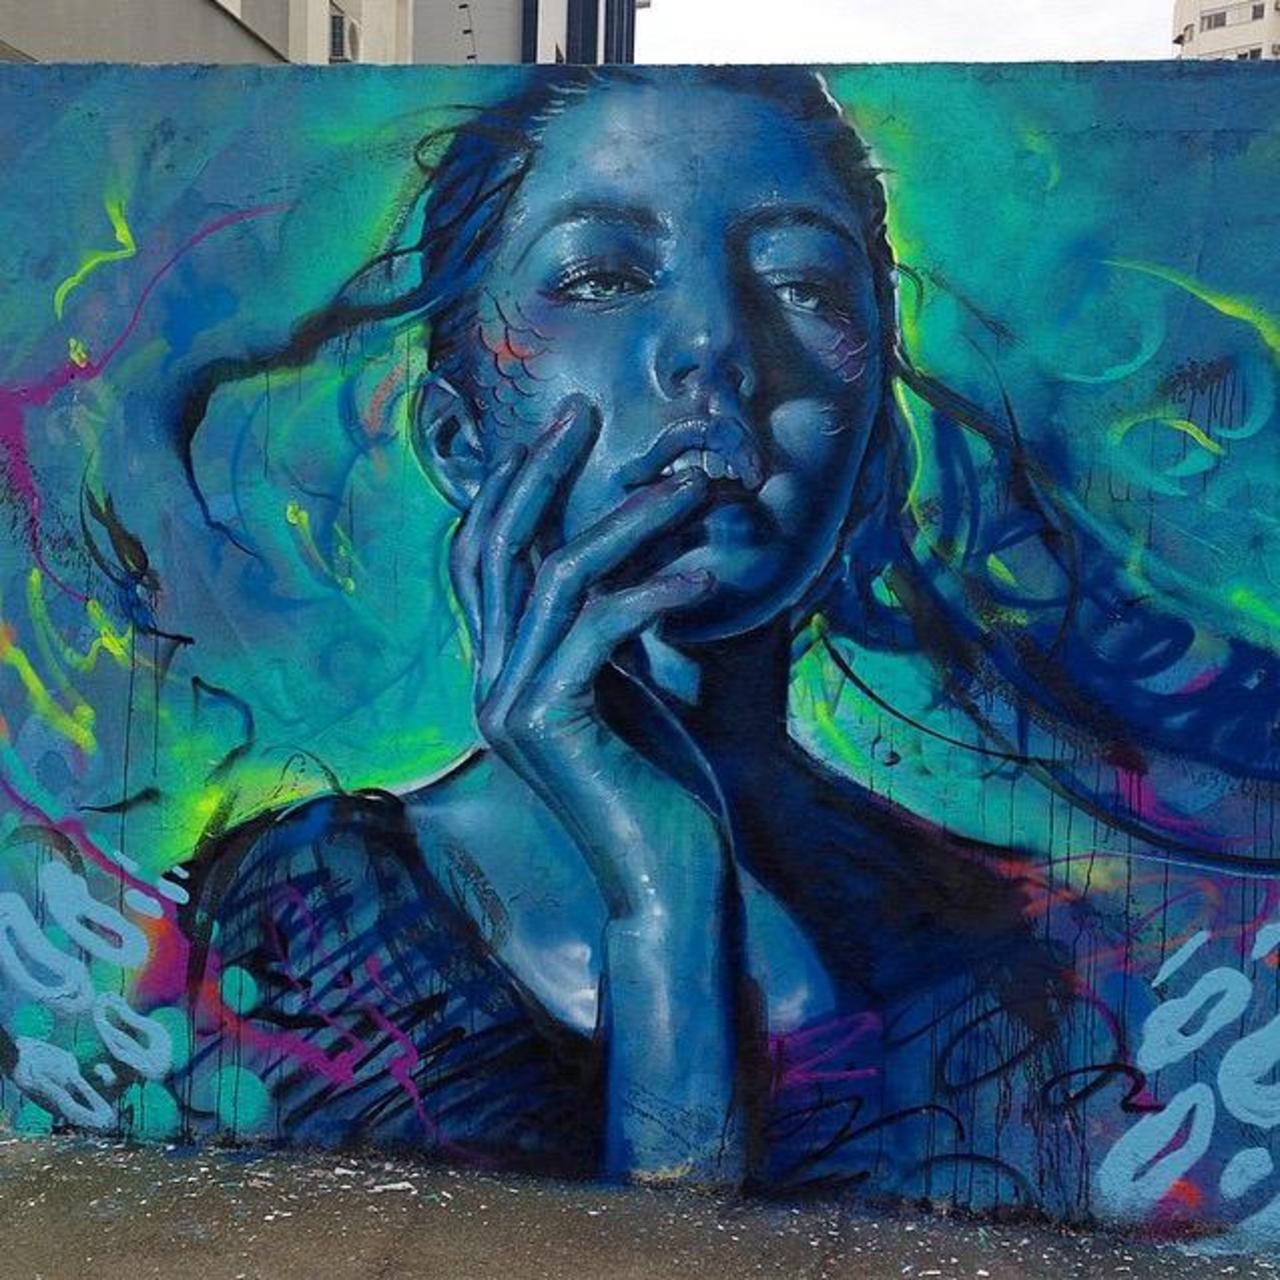 Thiago Valdi new Street Art piece titled 'Day Dreamer' #art #mural #graffiti #streetart http://t.co/3UodbQm48I …… http://twitter.com/charlesjackso14/status/652728503339745280